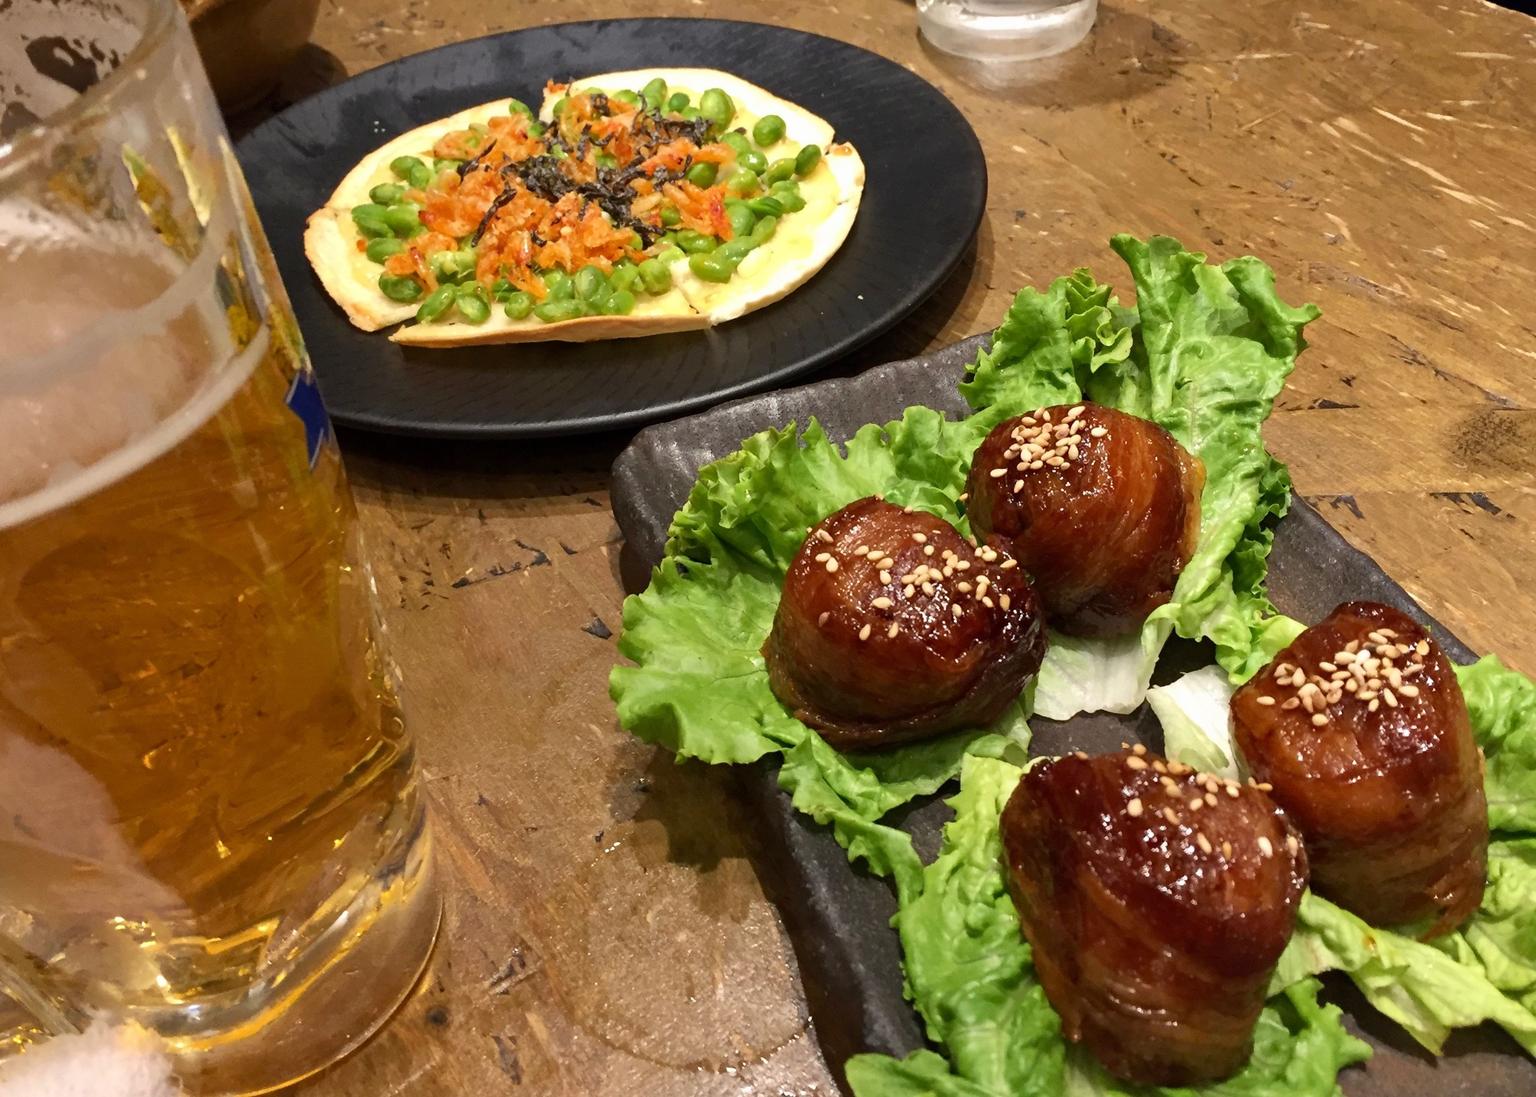 best food tours in tokyo